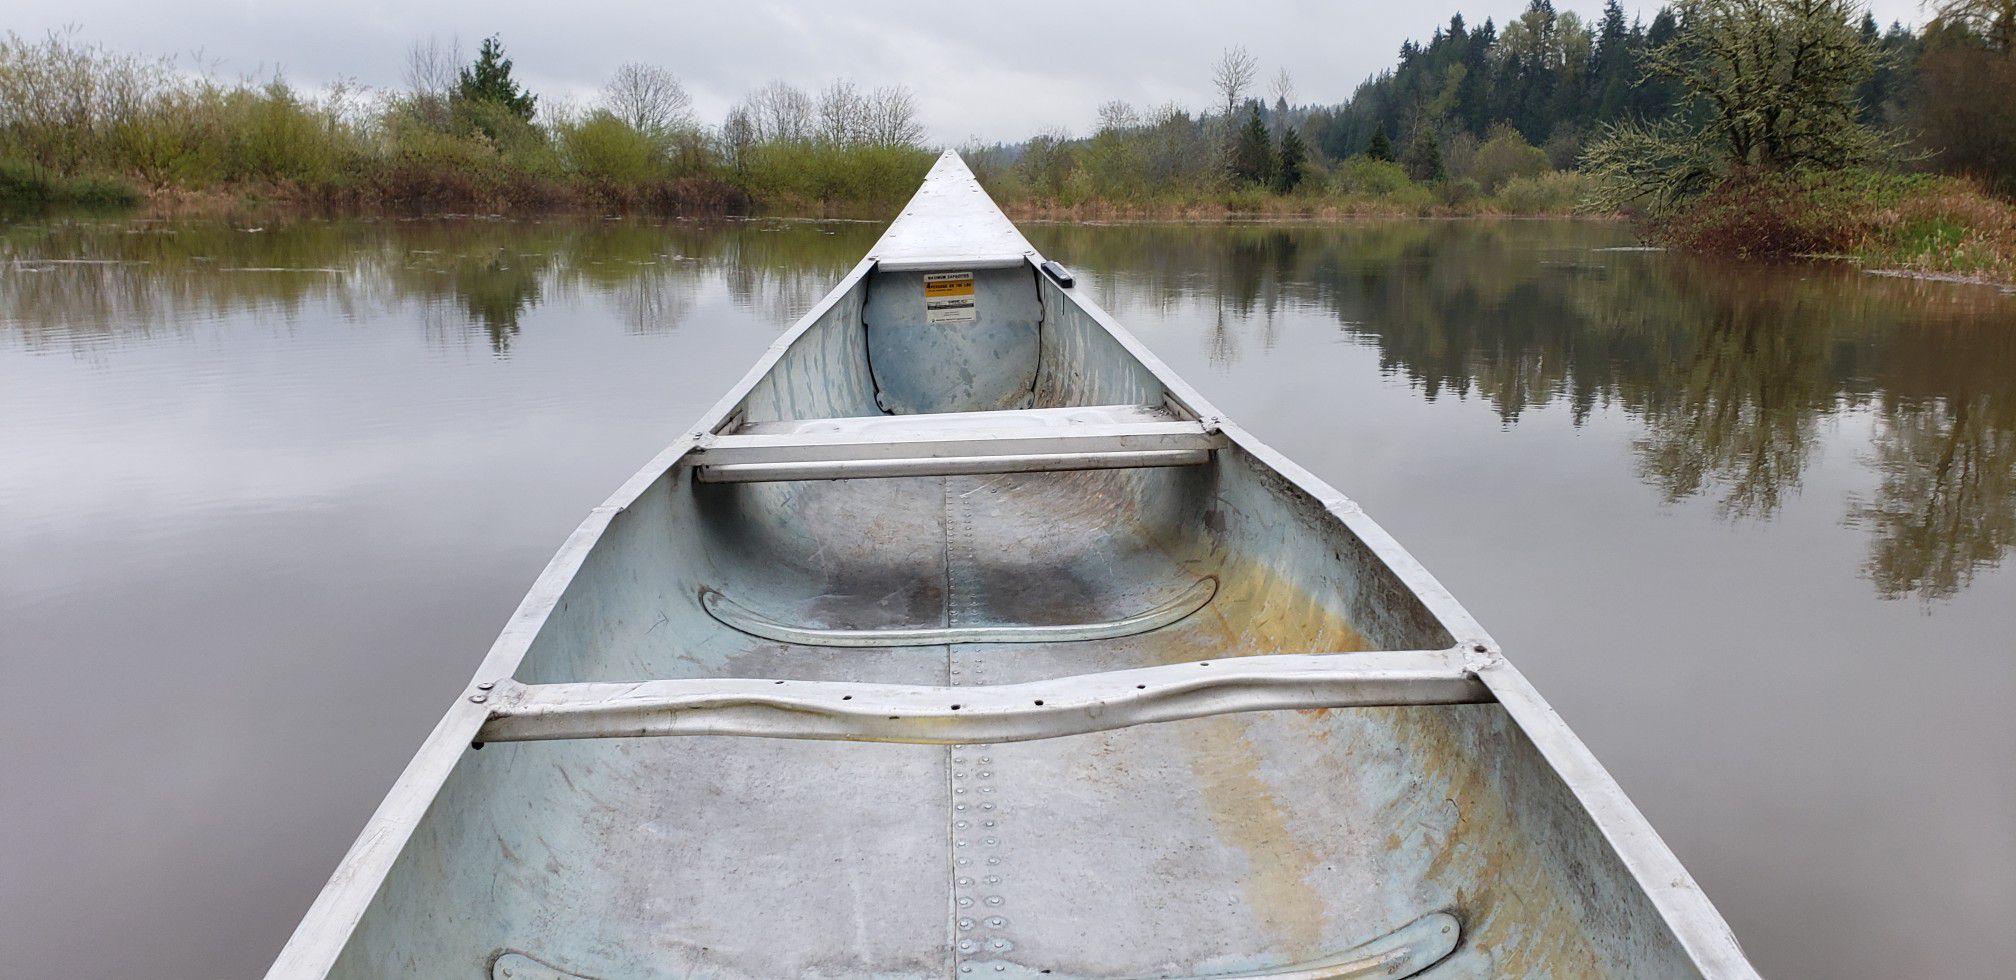 Alumacraft canoe Quetico 17